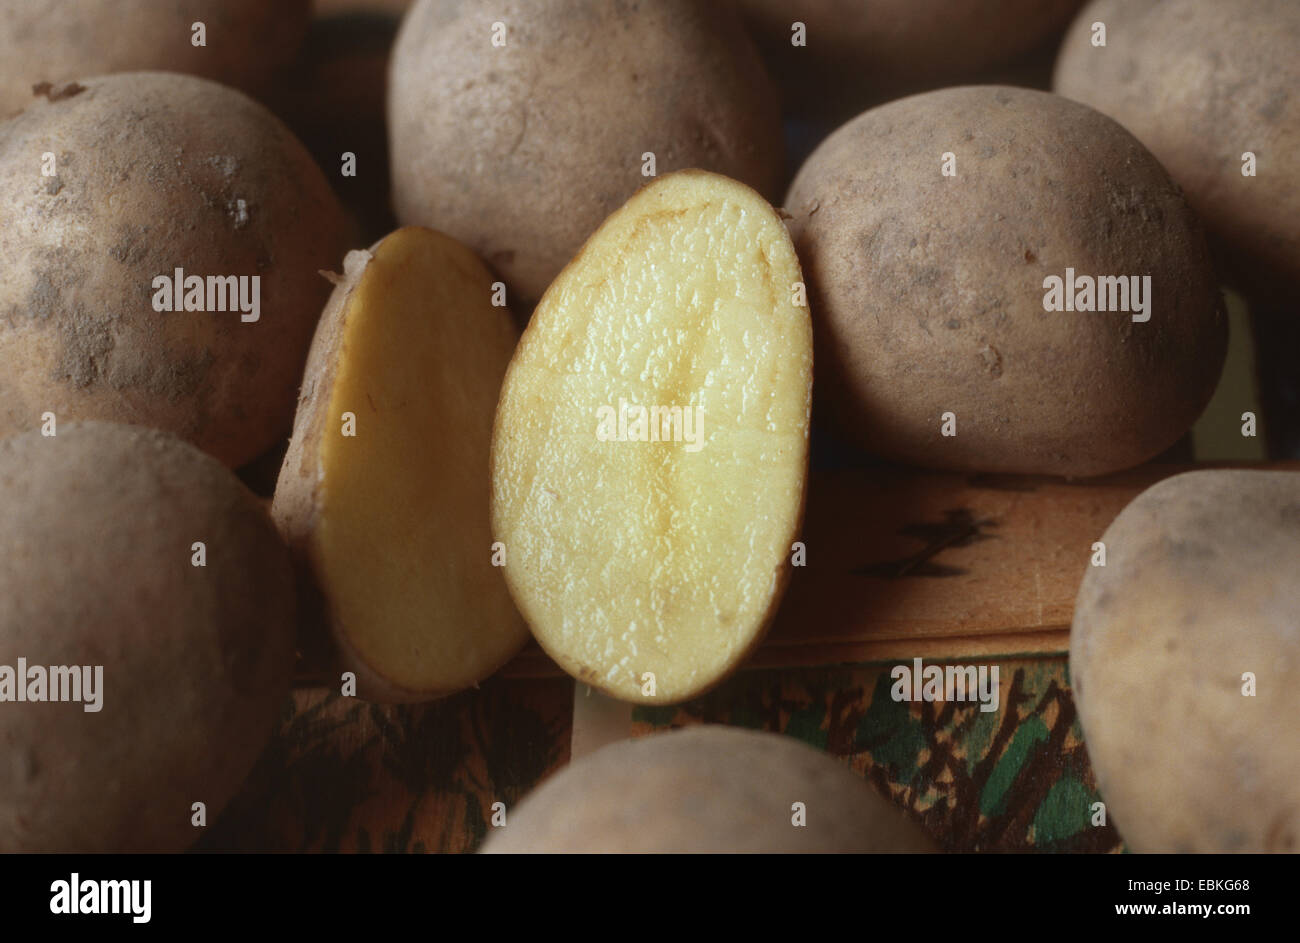 potato (Solanum tuberosum Linda), cultivar Linda Stock Photo